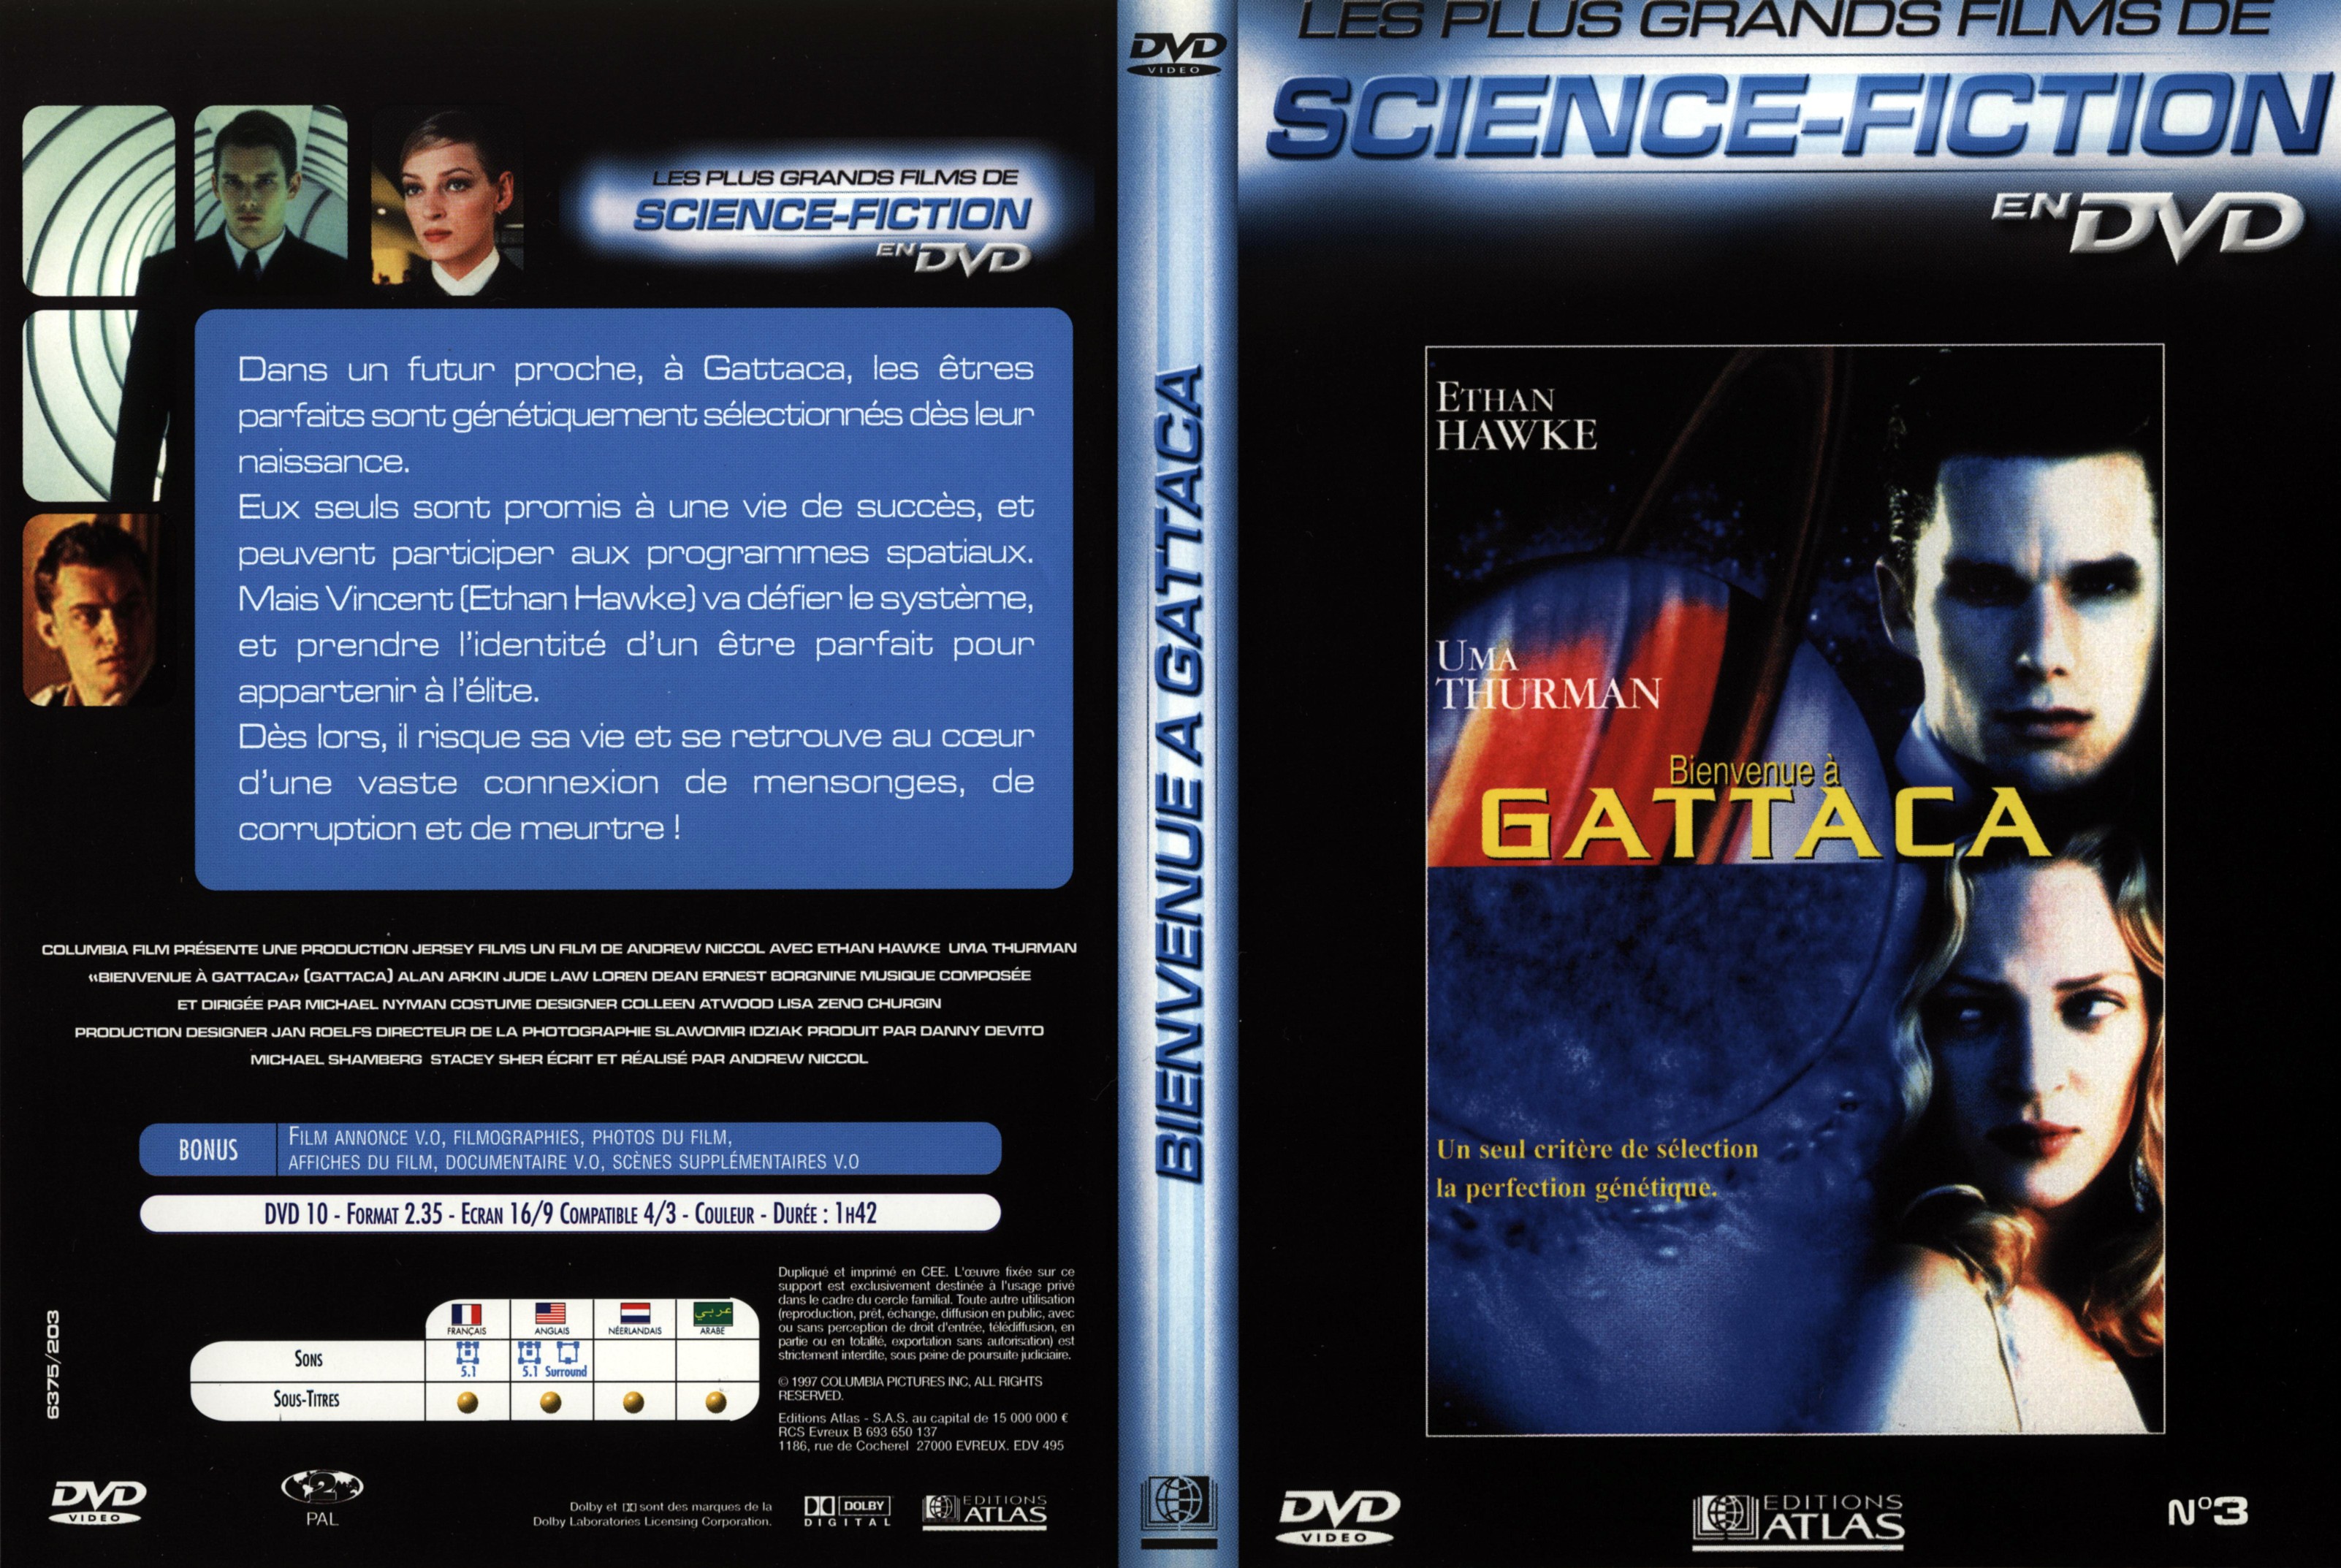 Jaquette DVD Bienvenue  Gattaca v2